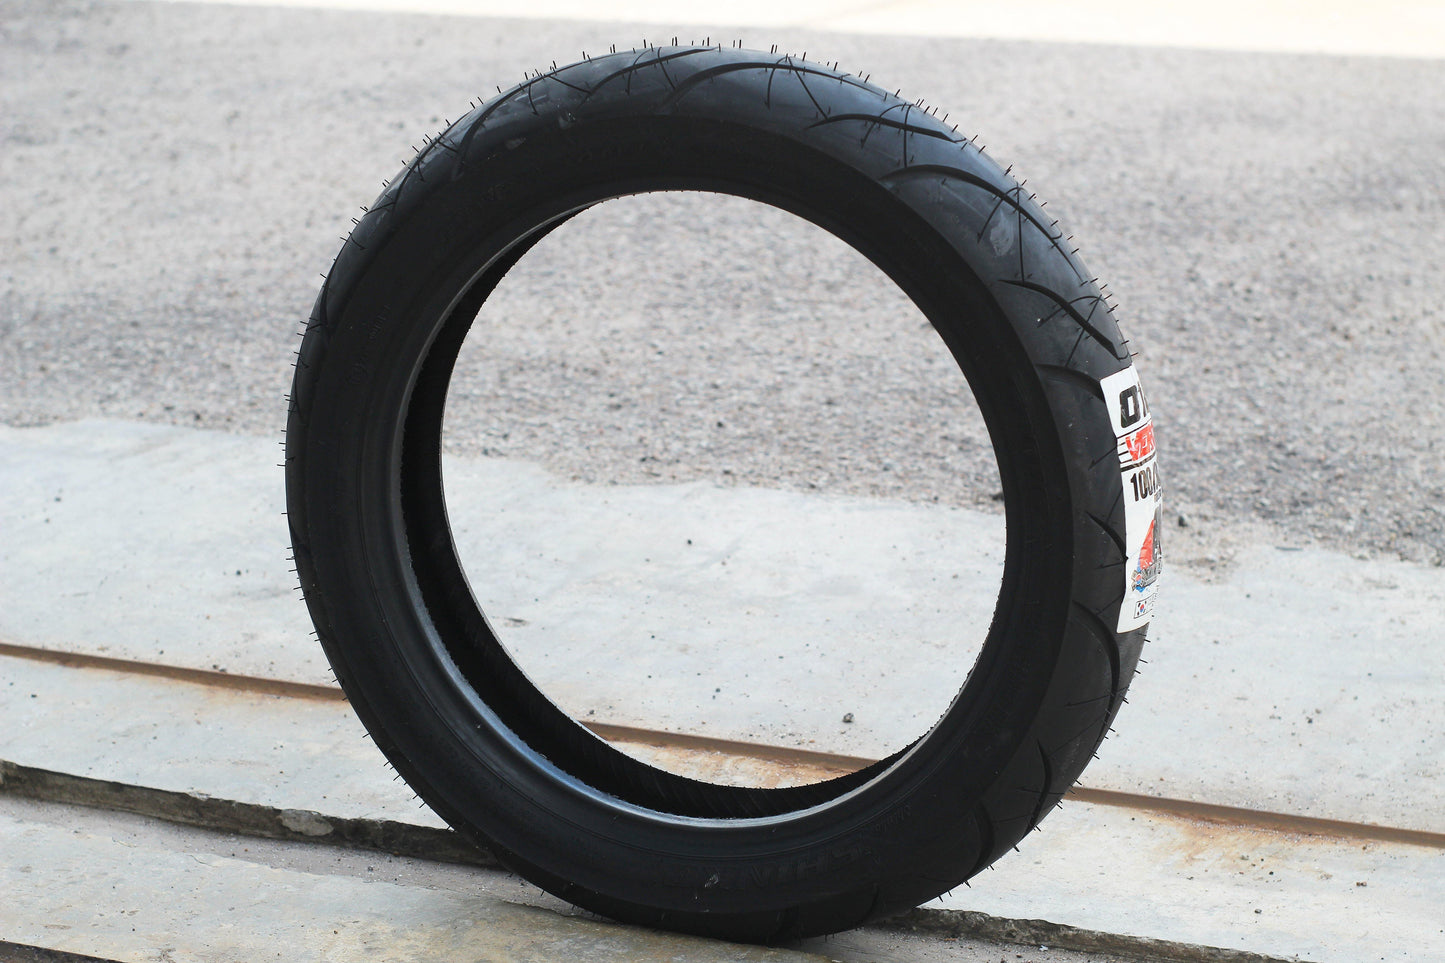 Shinko Tires SR016 Series (100/80-14) - Durian Bikers